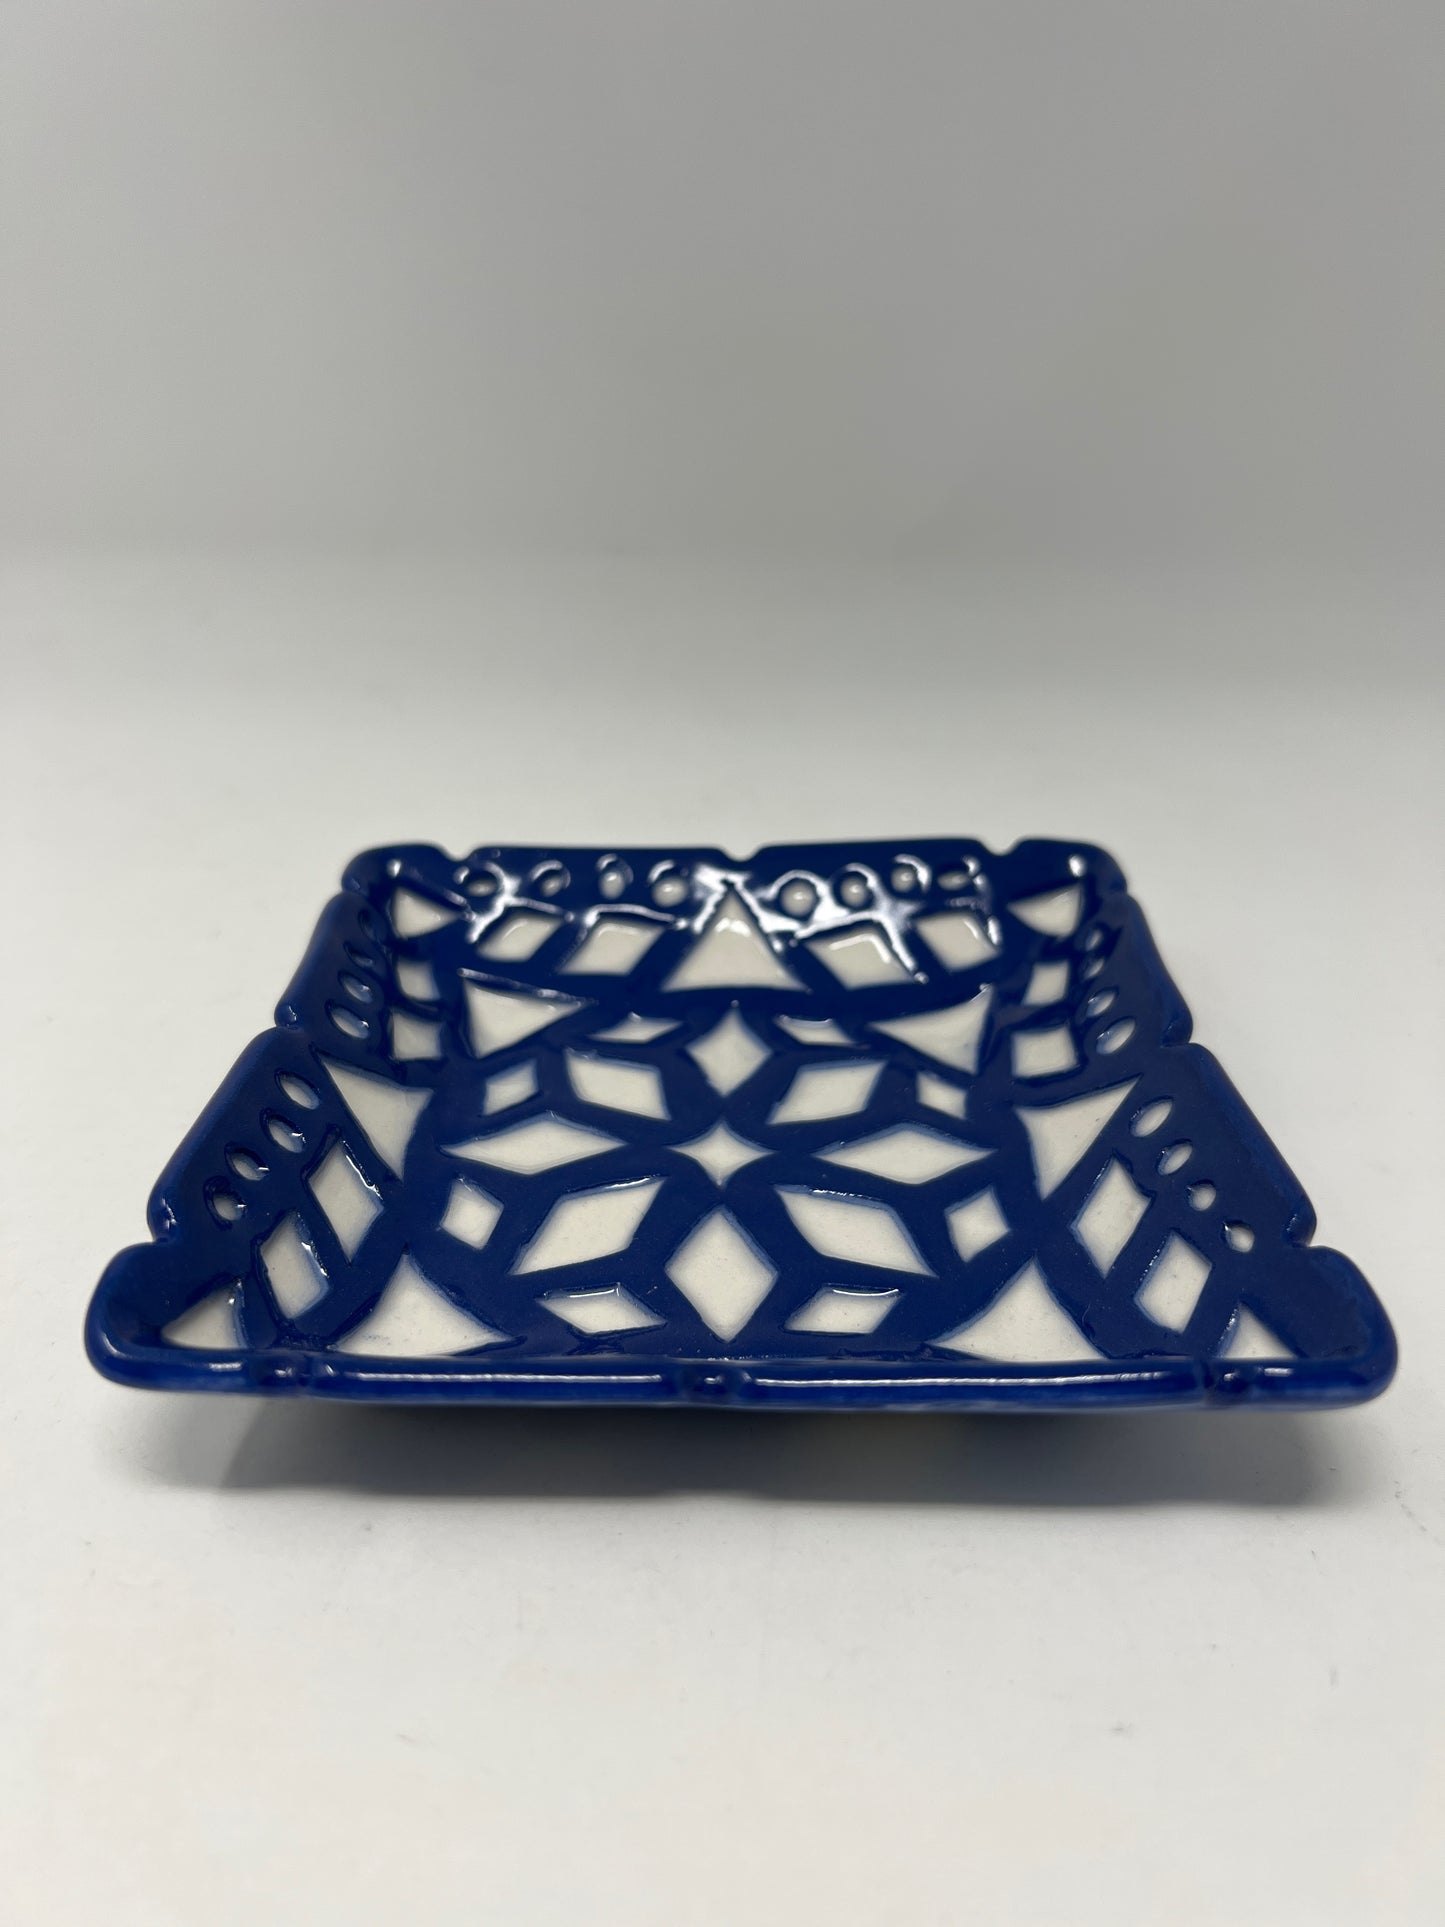 5" Square Blue and White Ceramic Dish